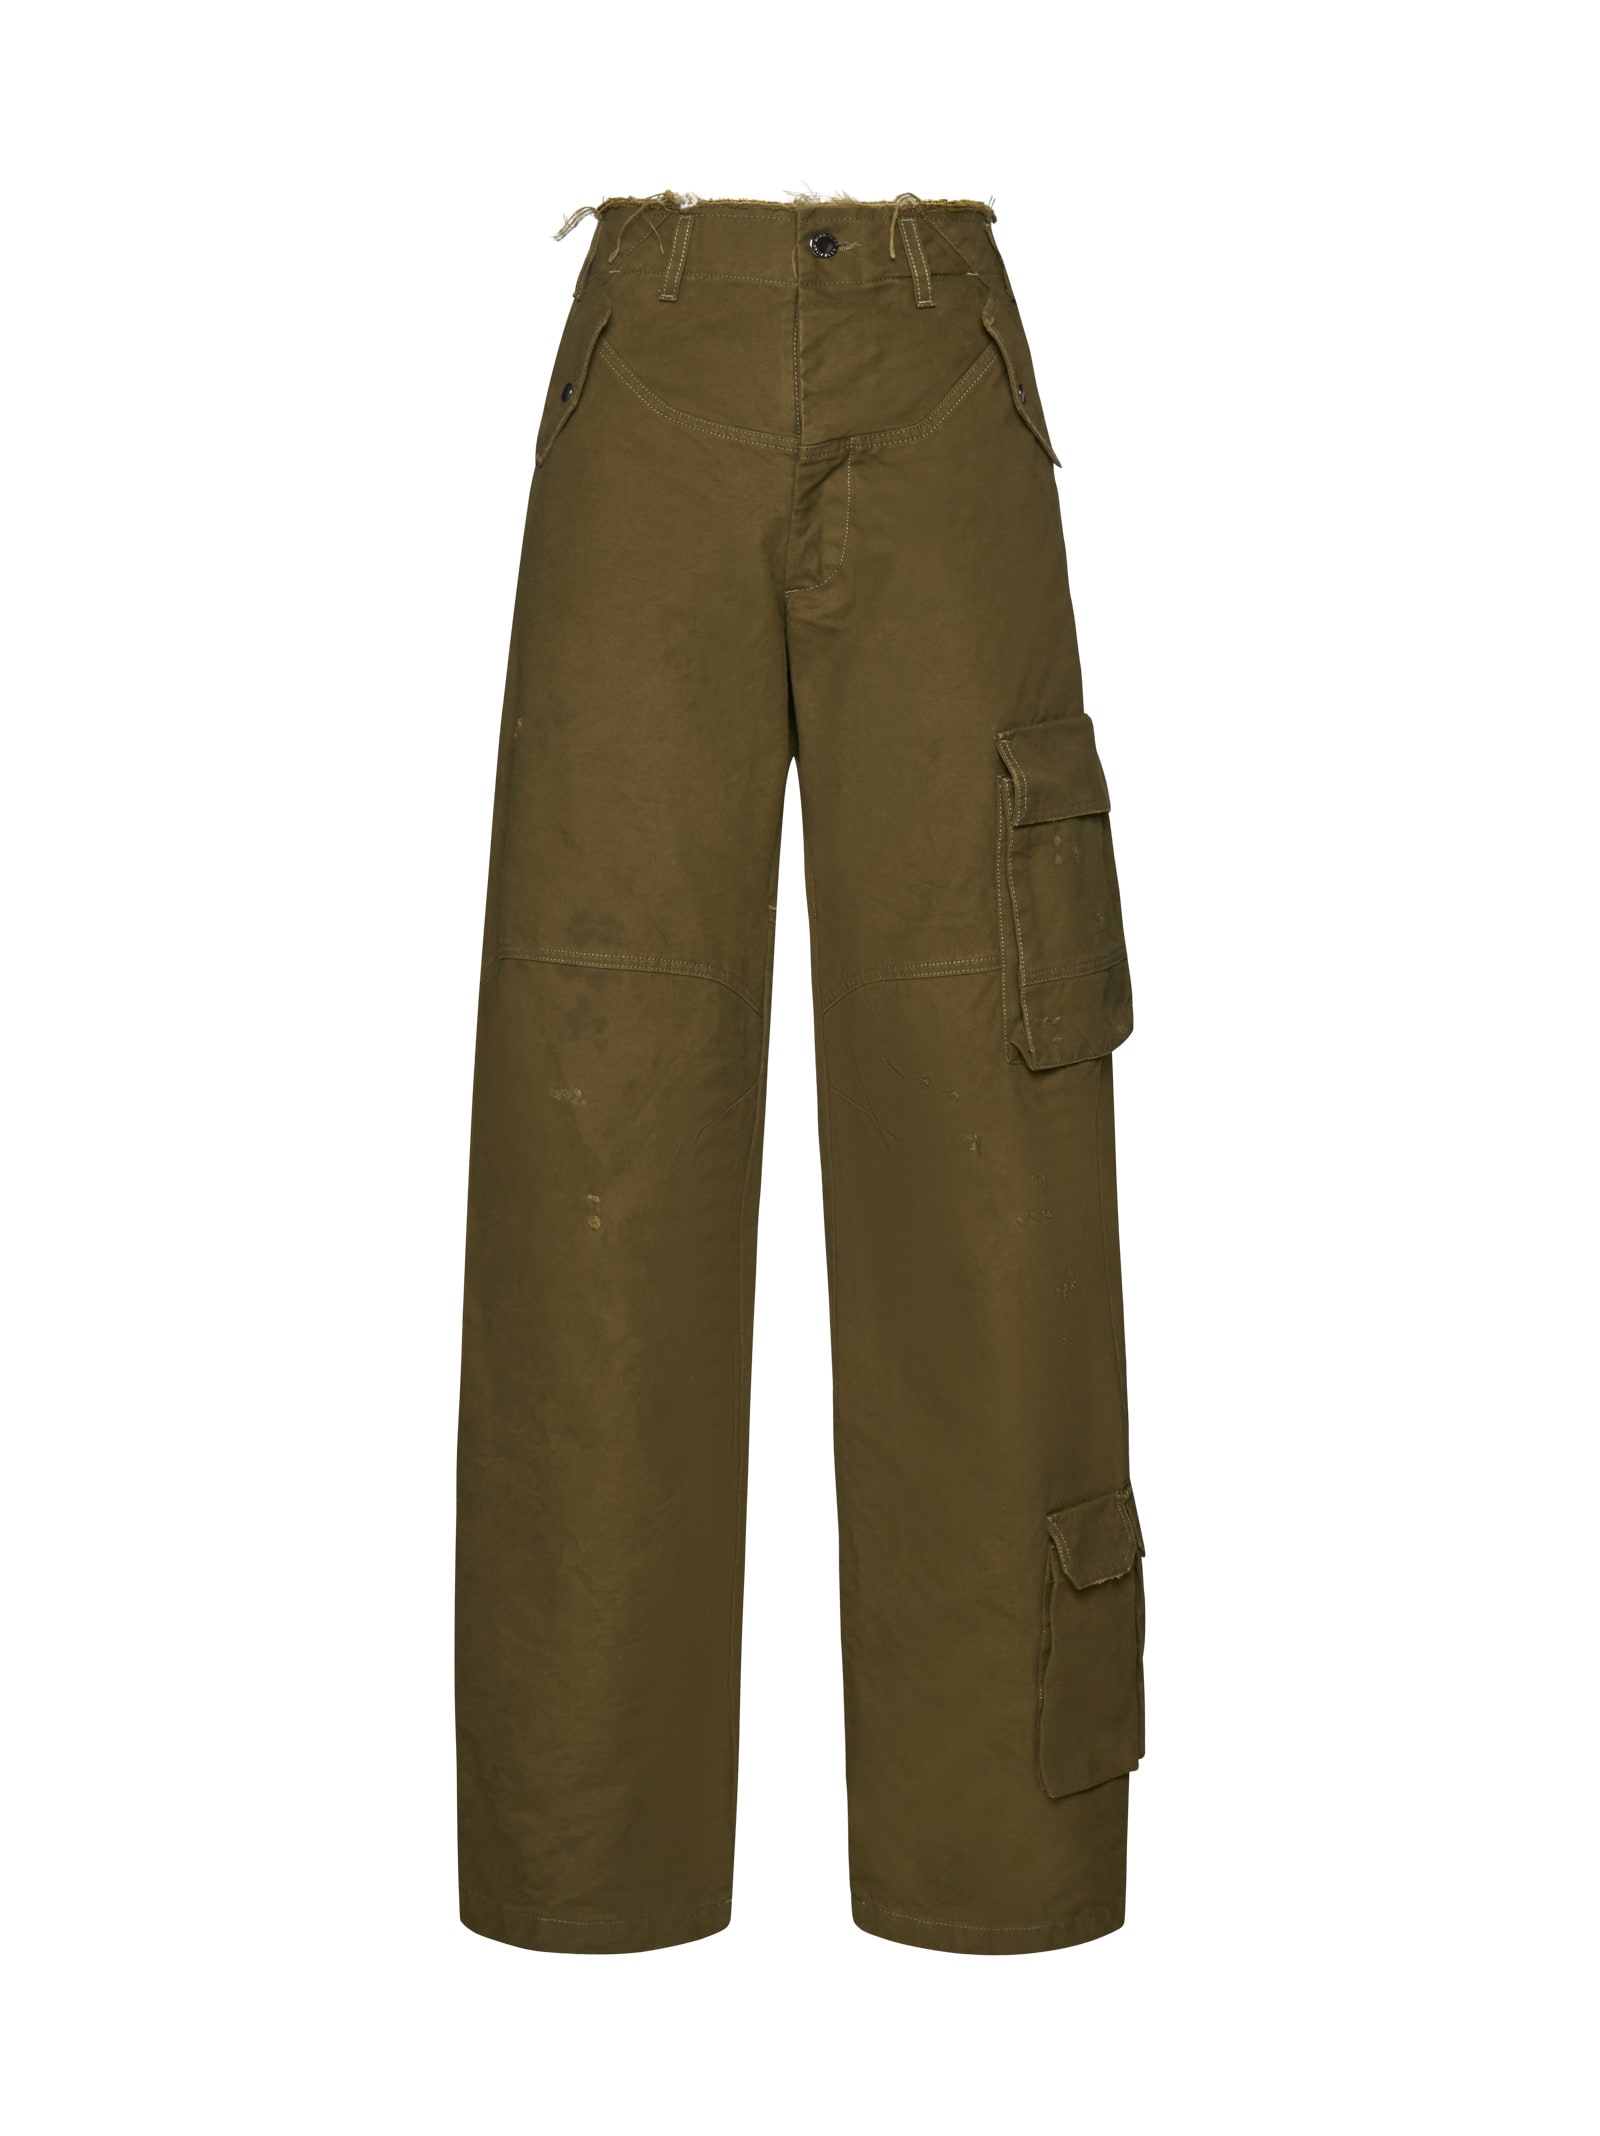 DARKPARK Rosalind cargo pants - Green